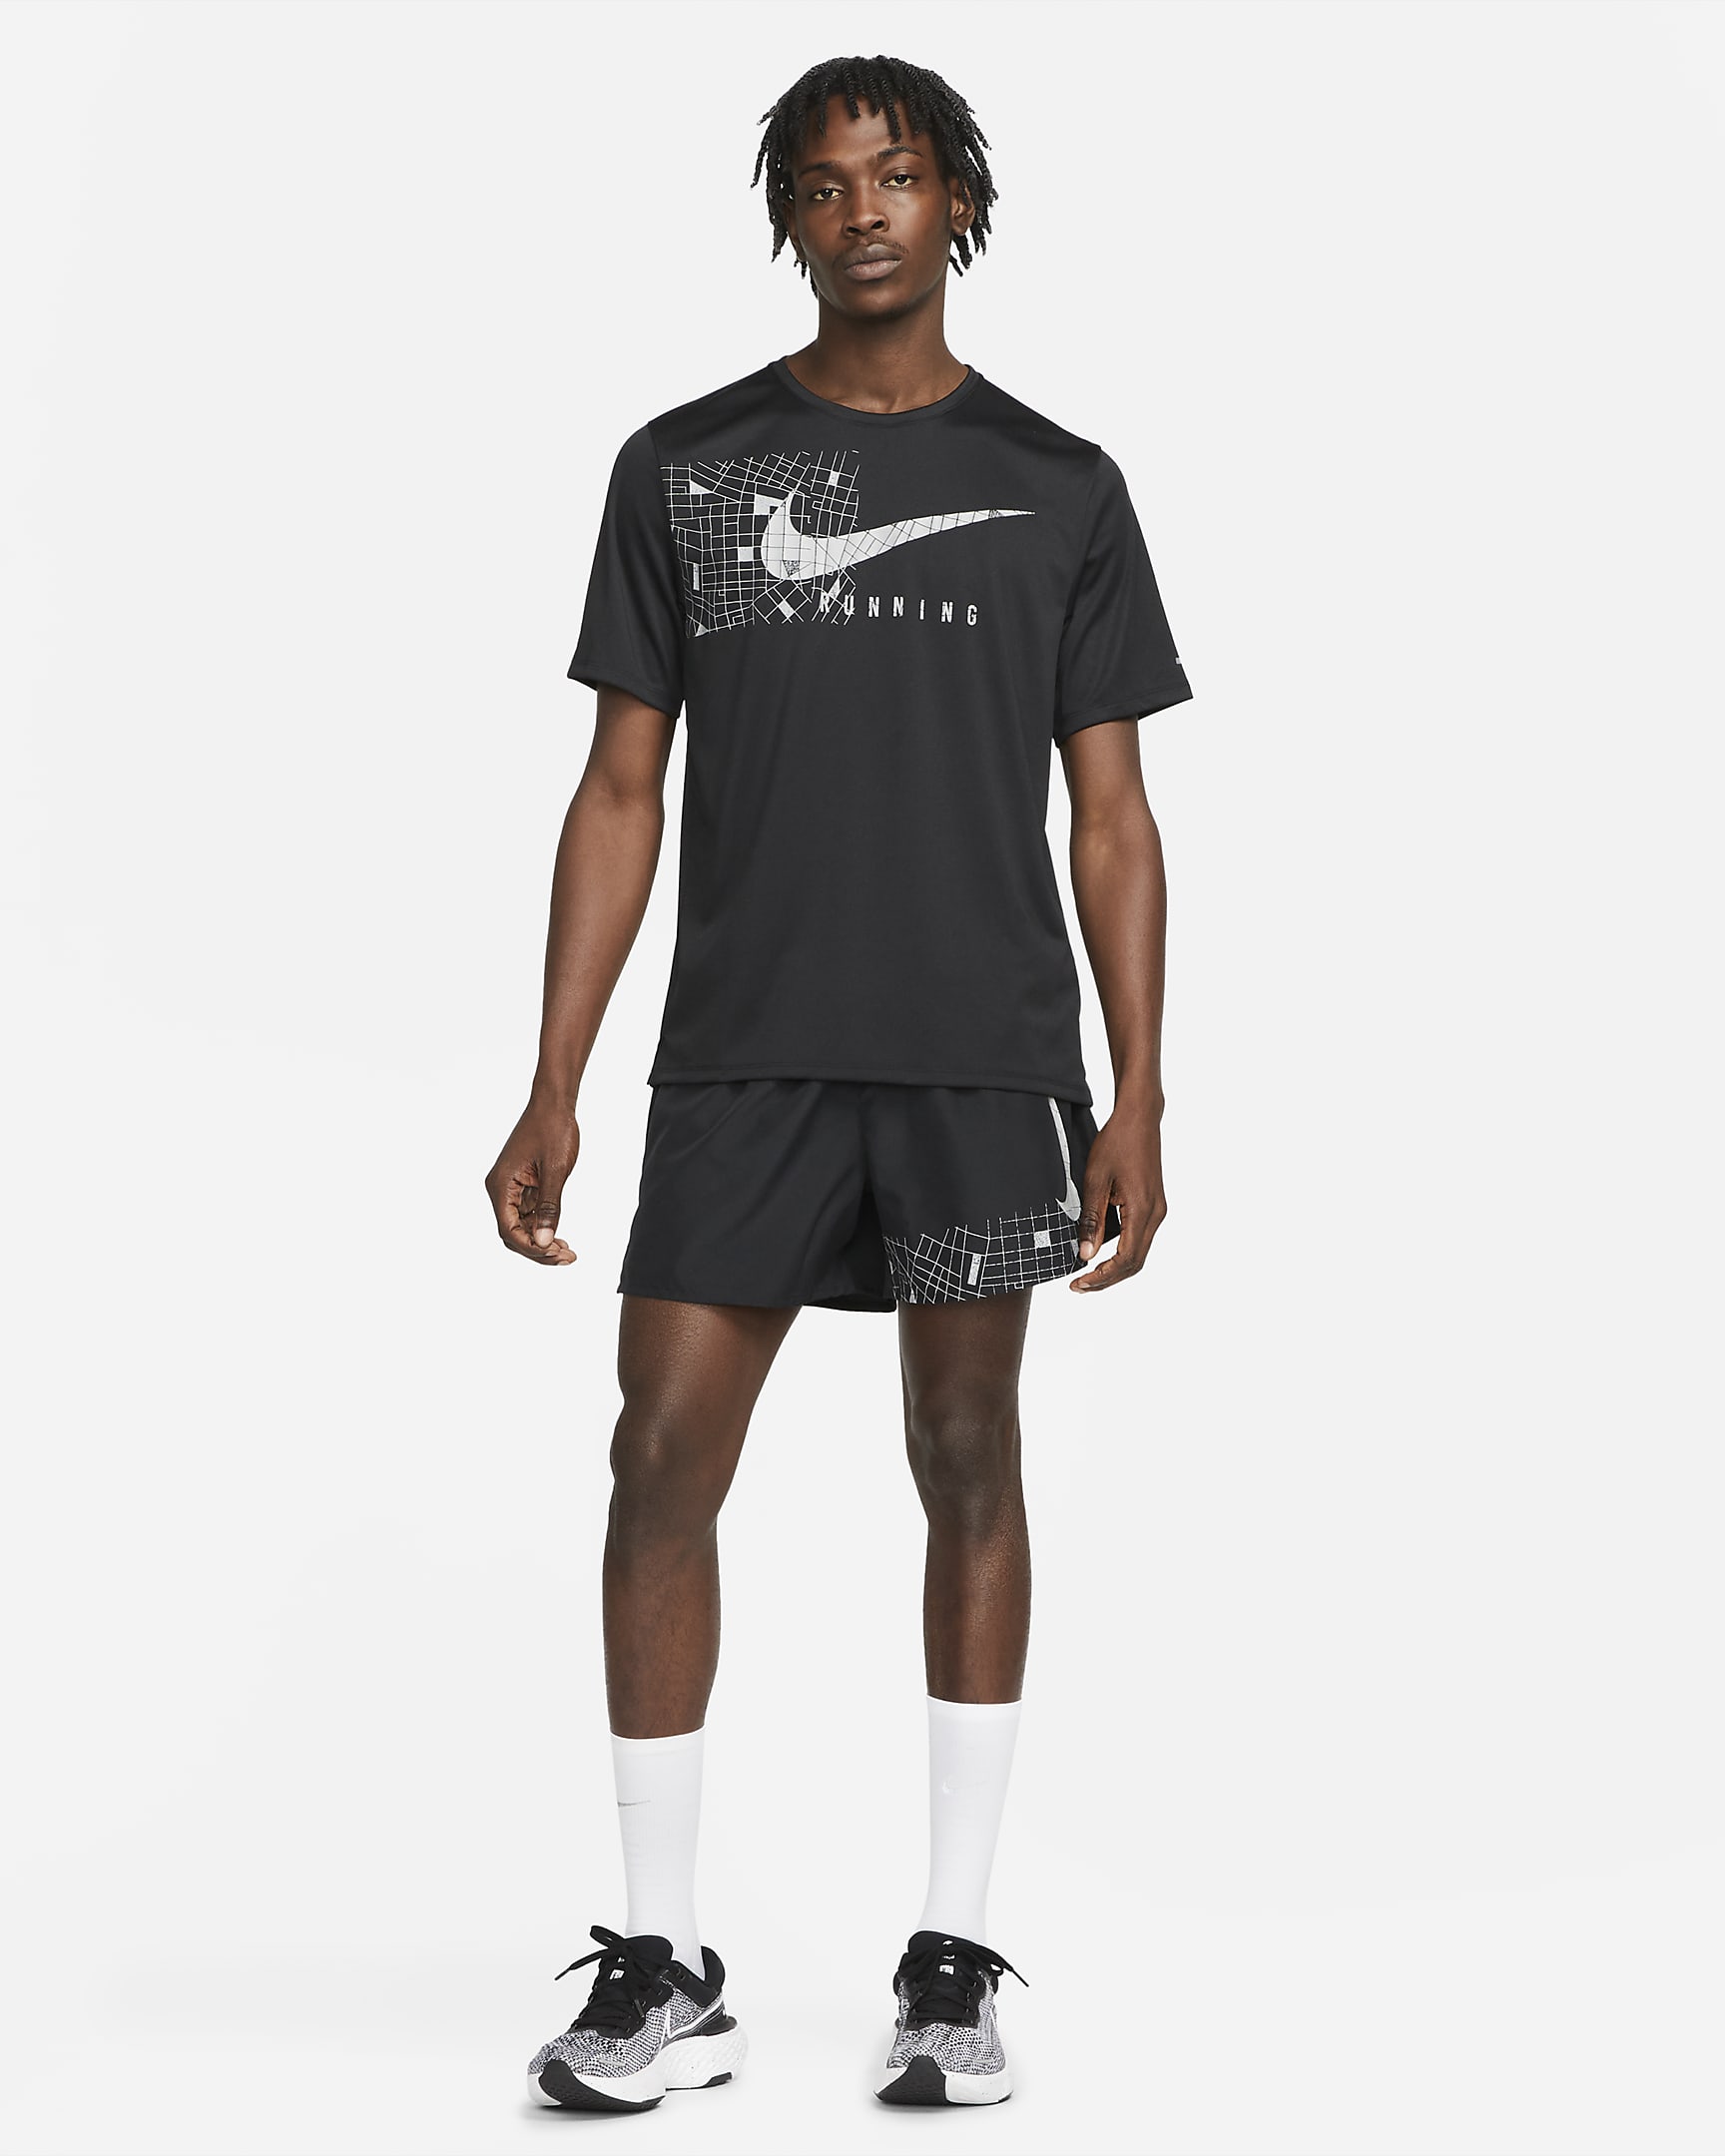 Nike Dri-FIT UV Miler Run Division Men's Short-Sleeve Graphic Running ...